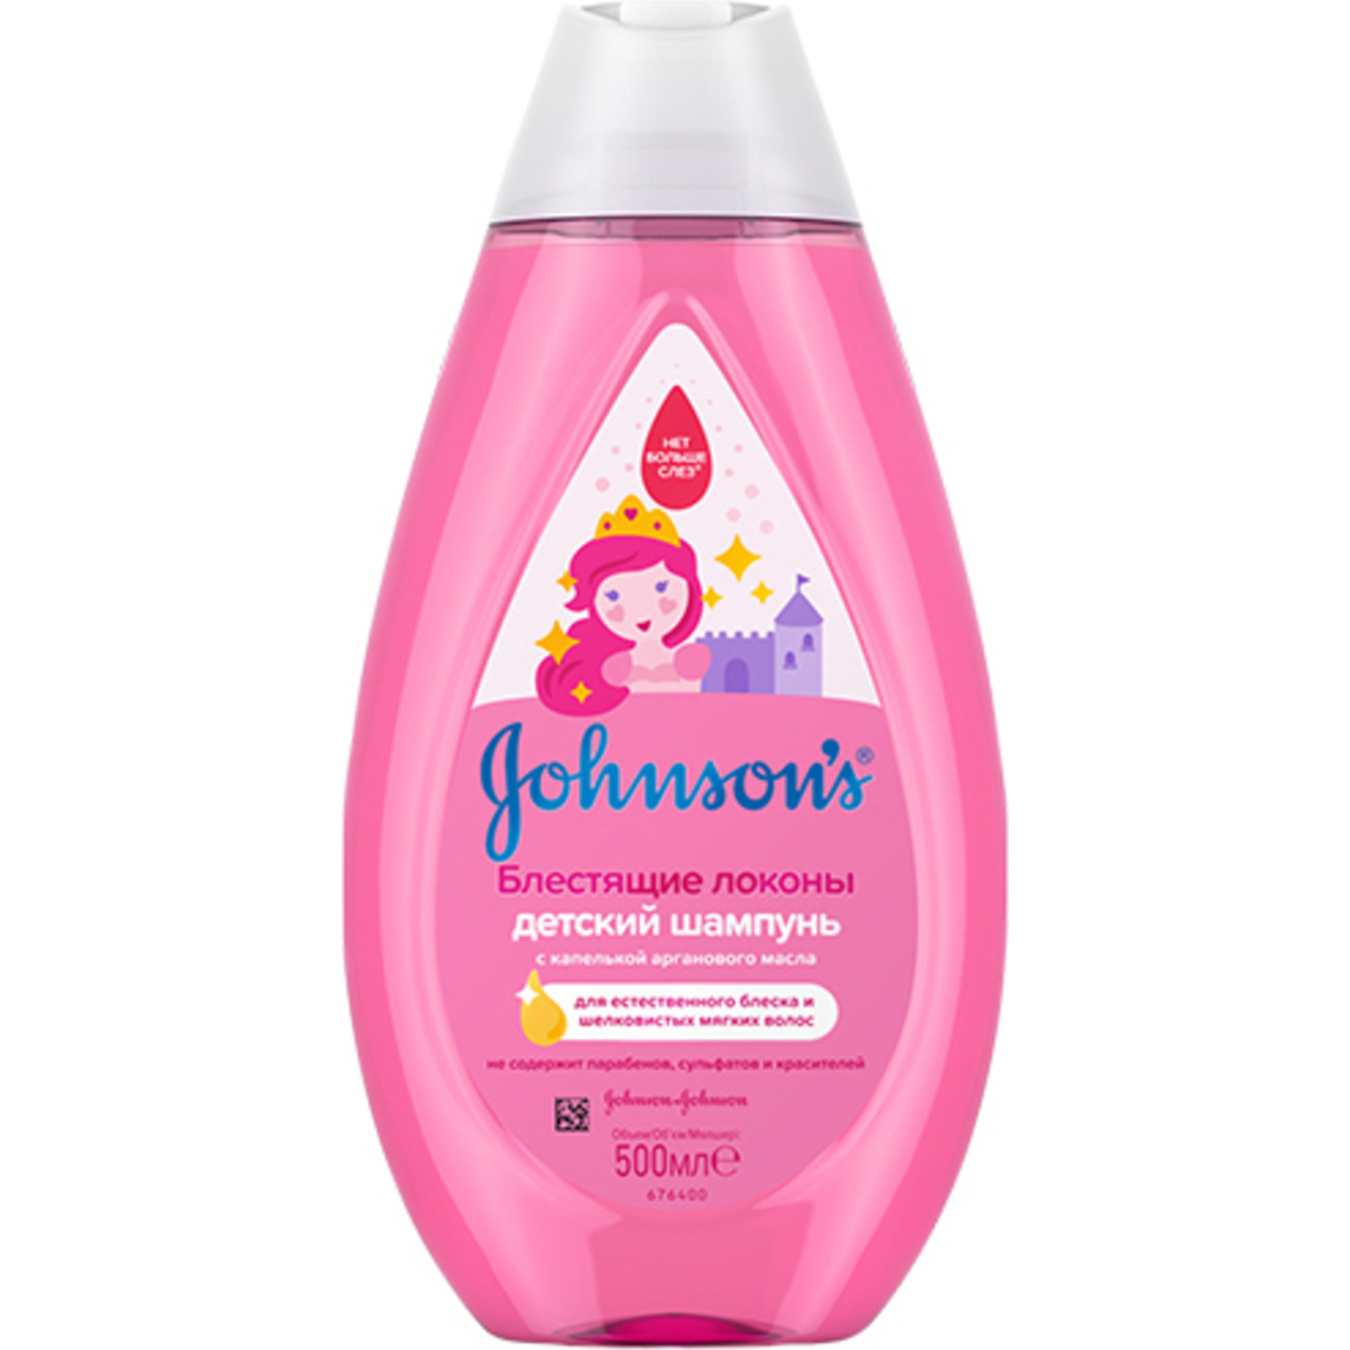 Johnson's Shiny Curls Shampoo for Children 500ml